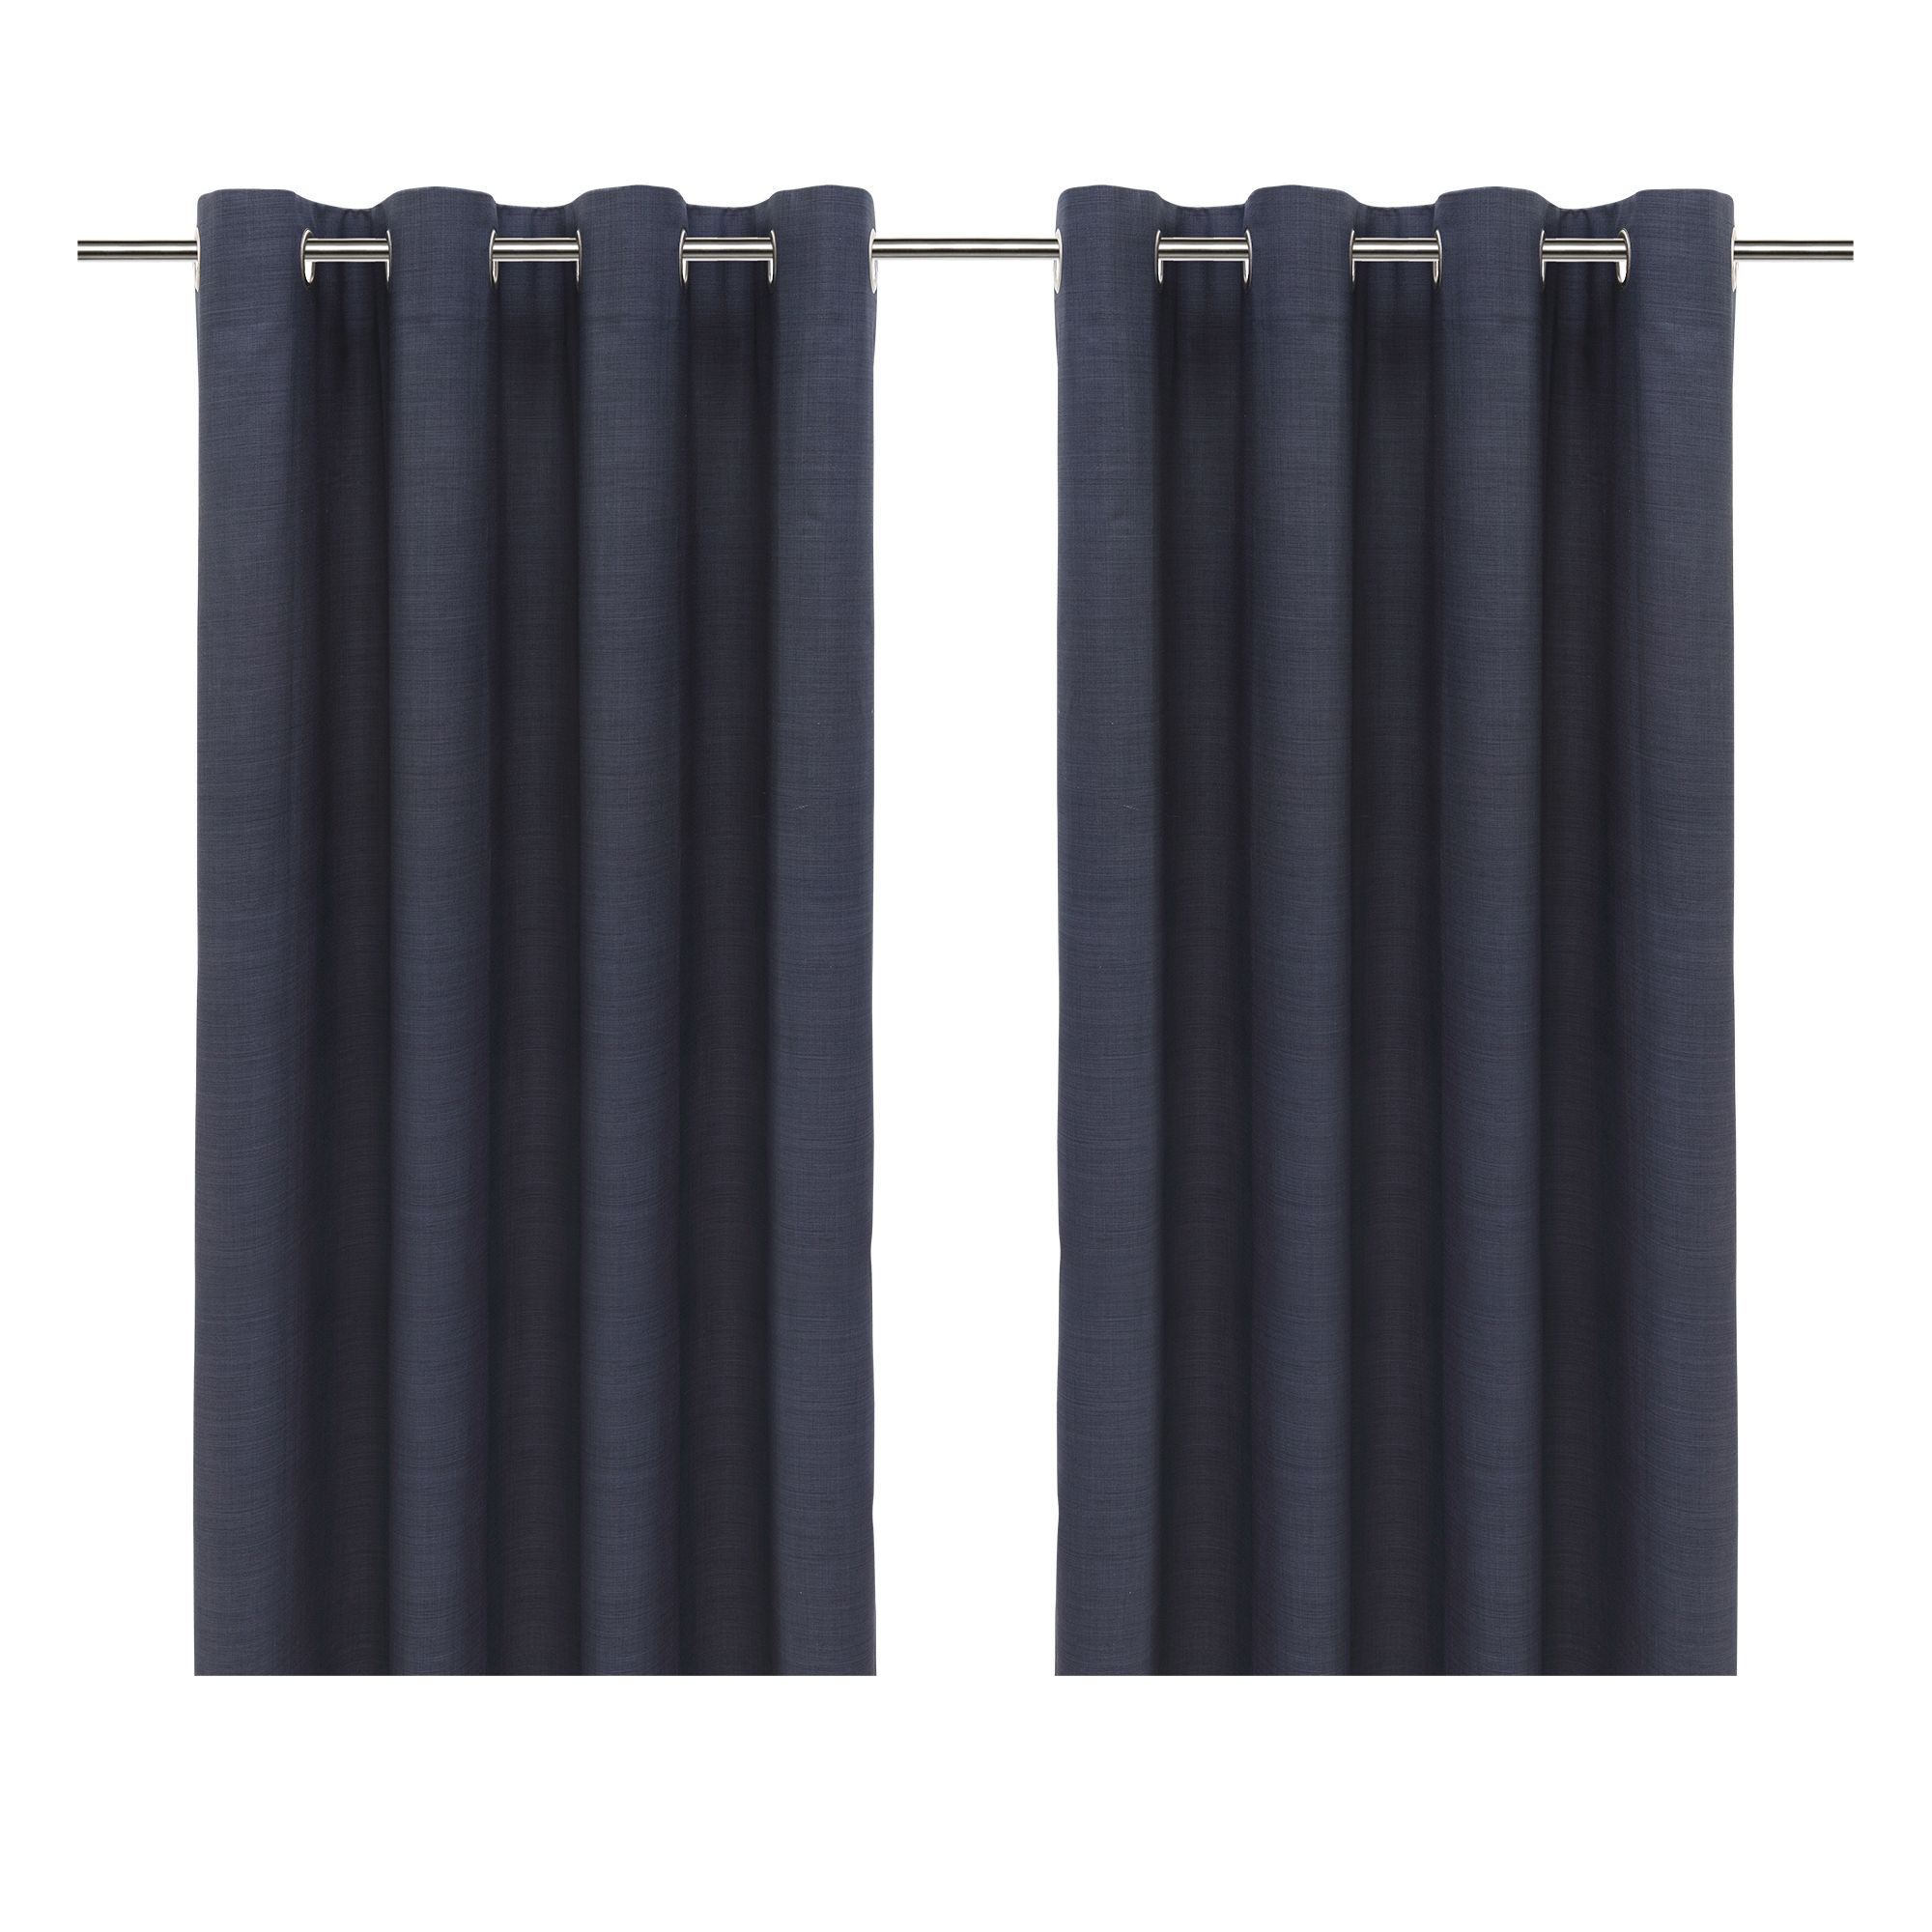 Glend Navy Plain woven Blackout & thermal Eyelet Curtain (W)228cm (L)228cm, Pair